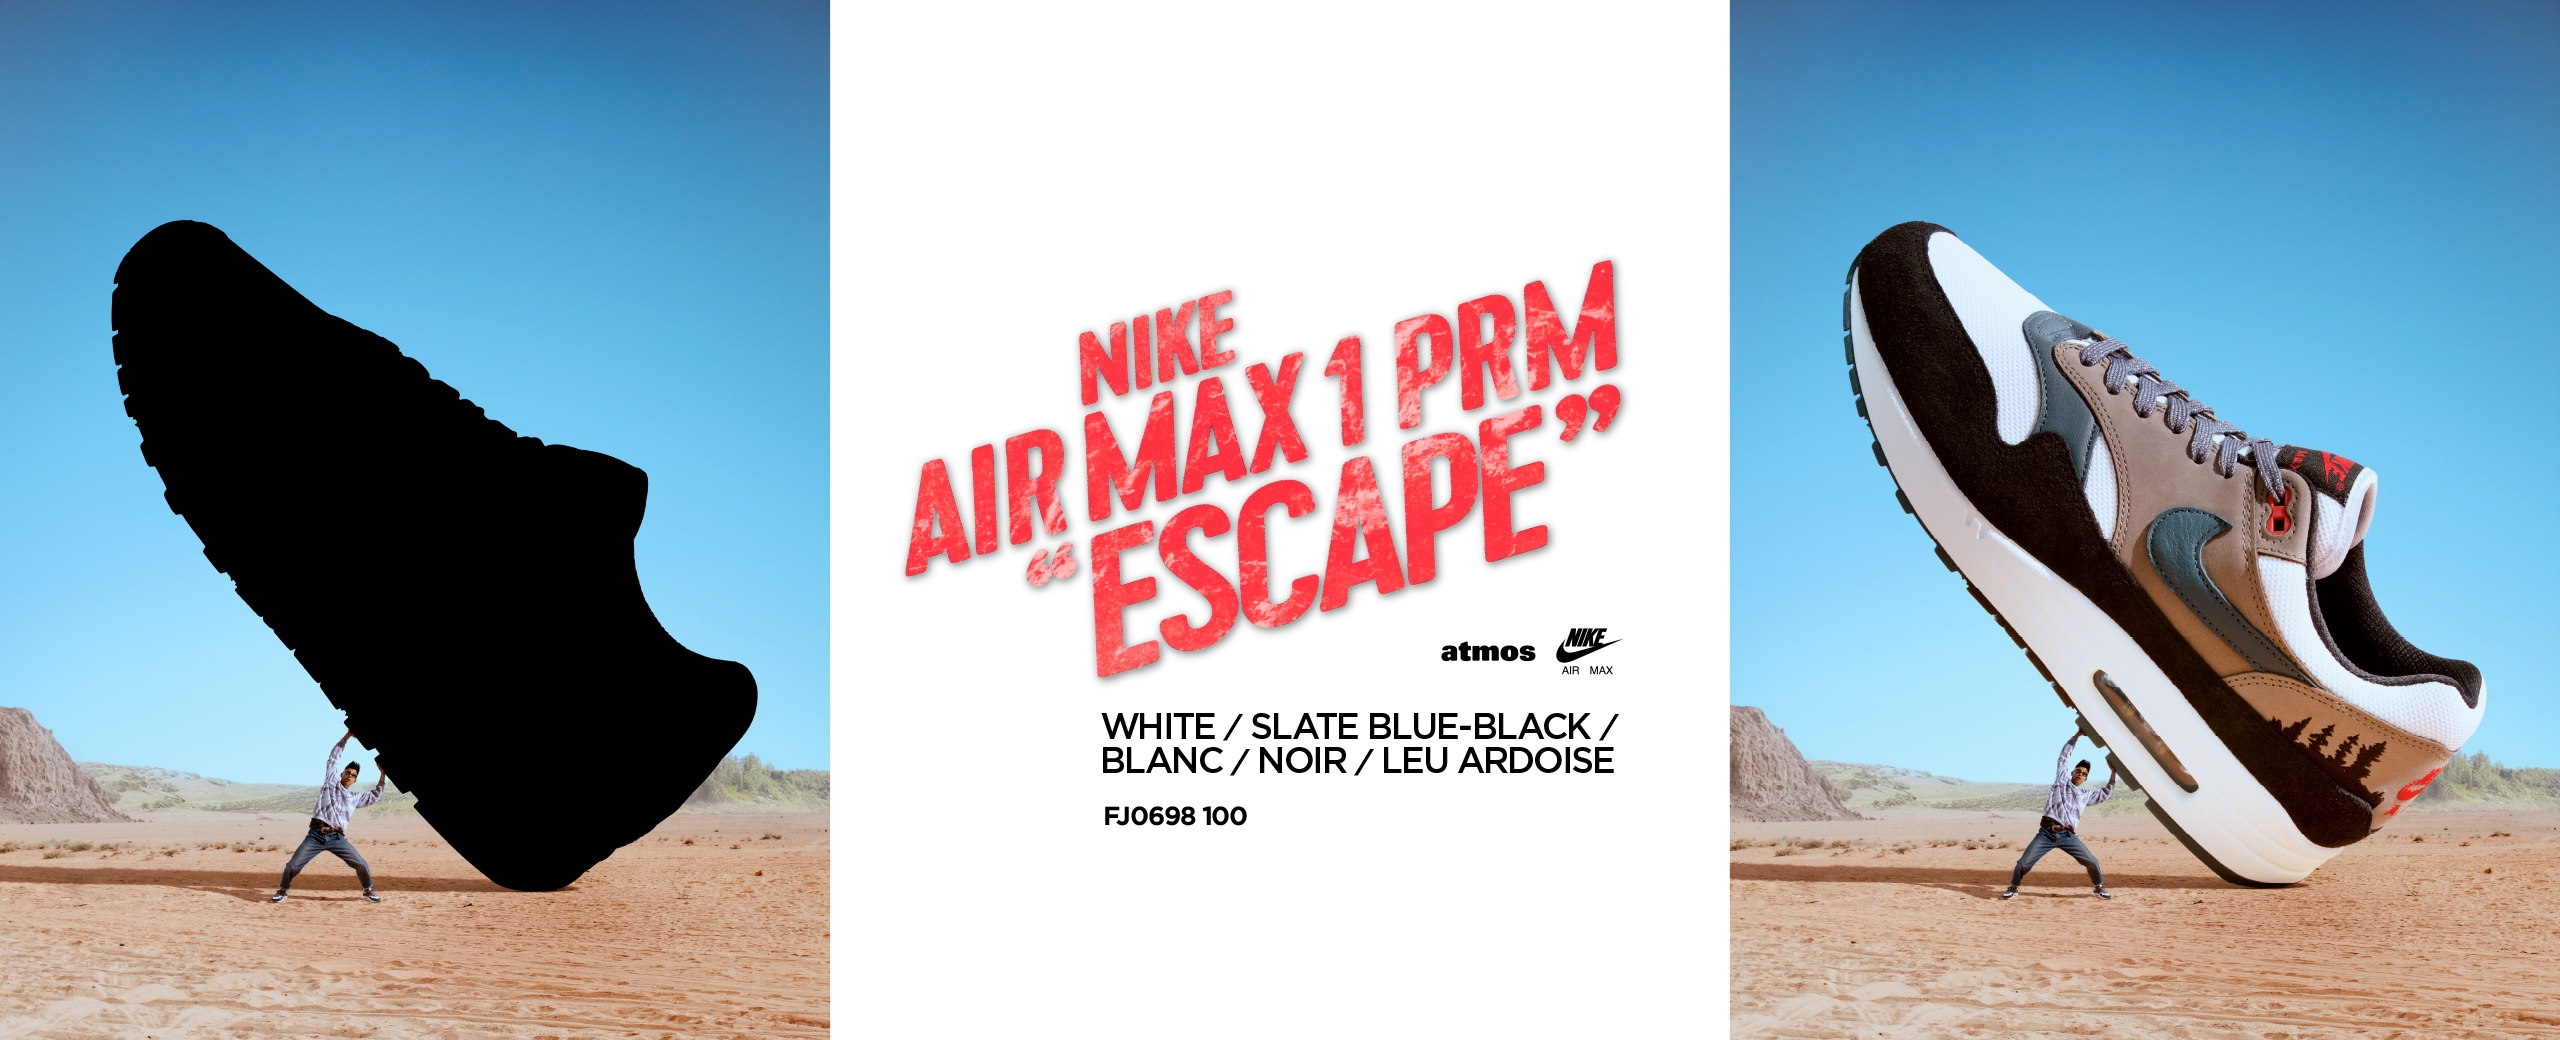 nike-air-max-1-prm-escape